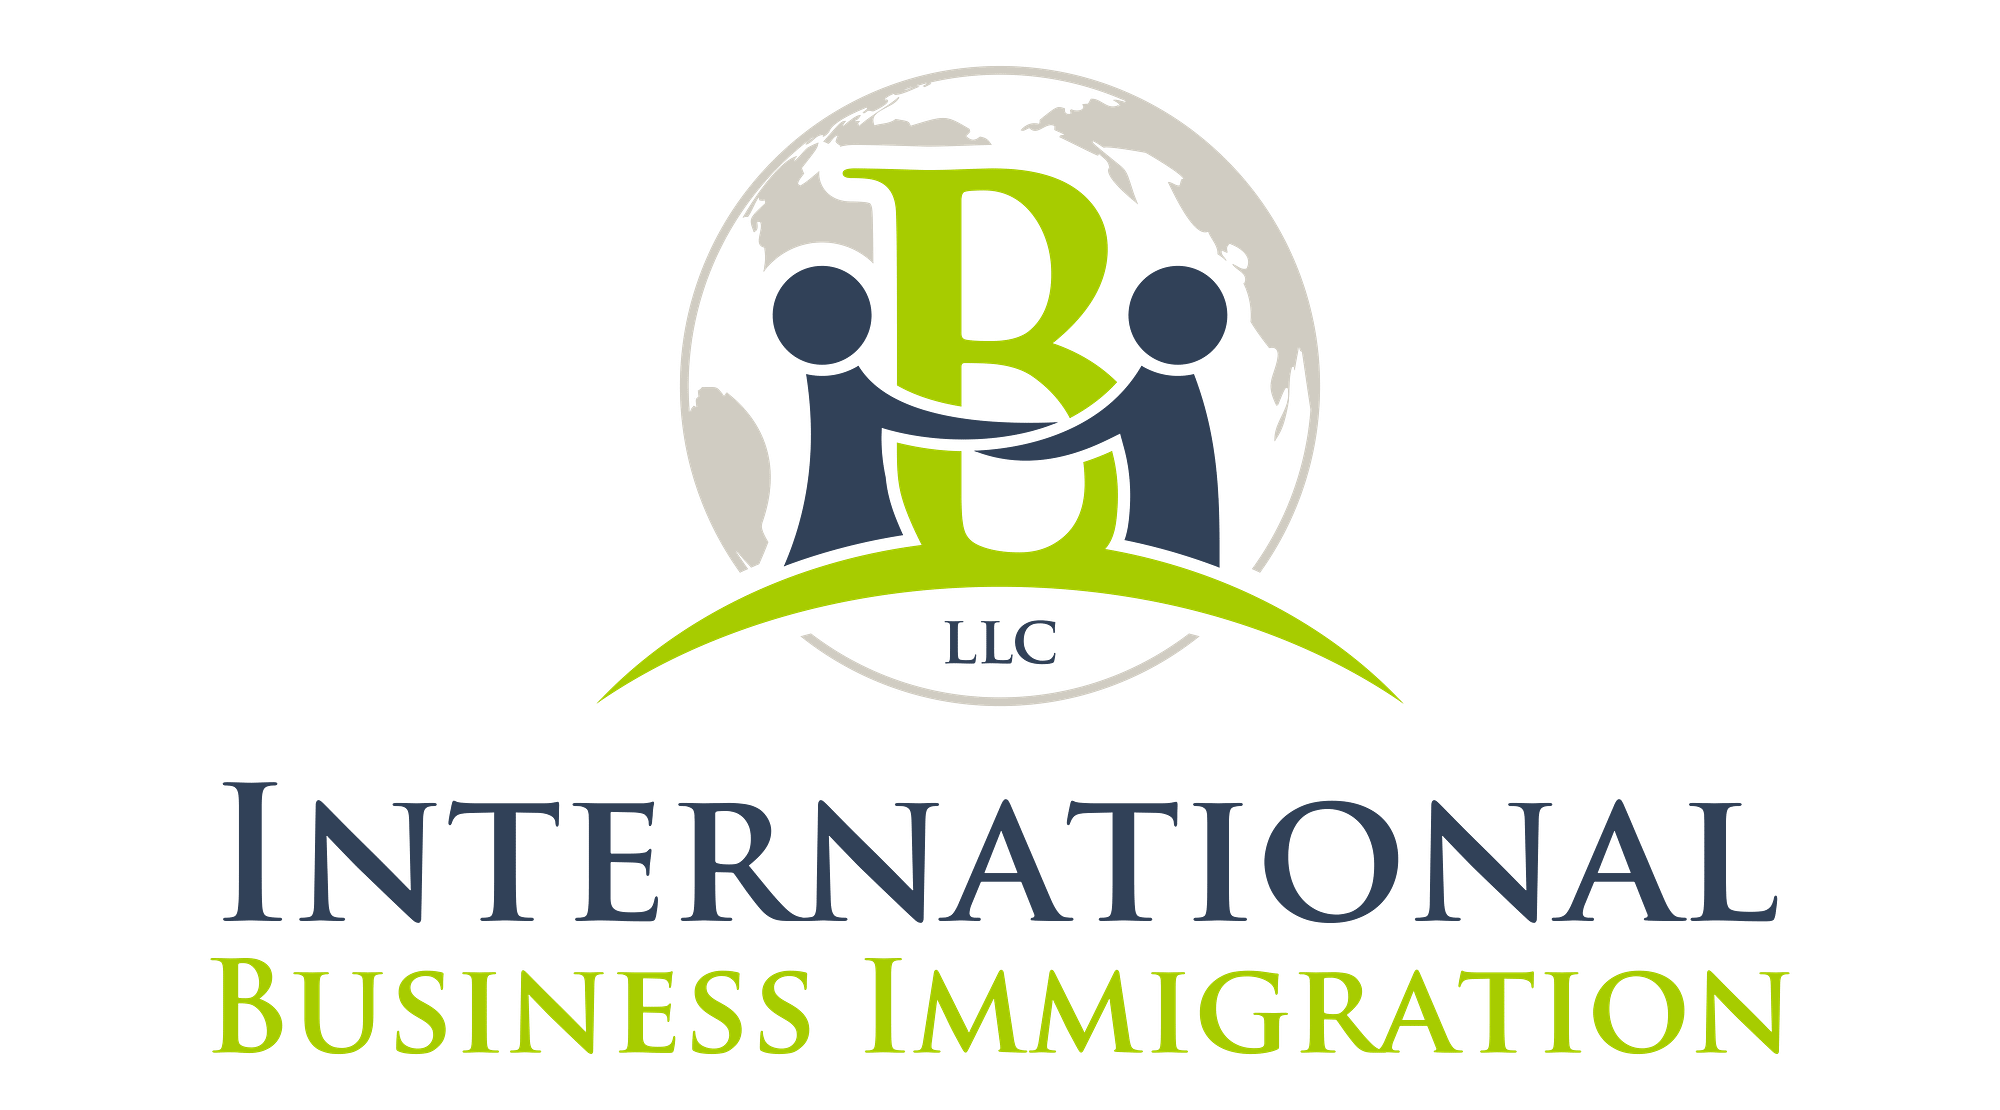 Contact us, iBi LLC (International Business Immigration)